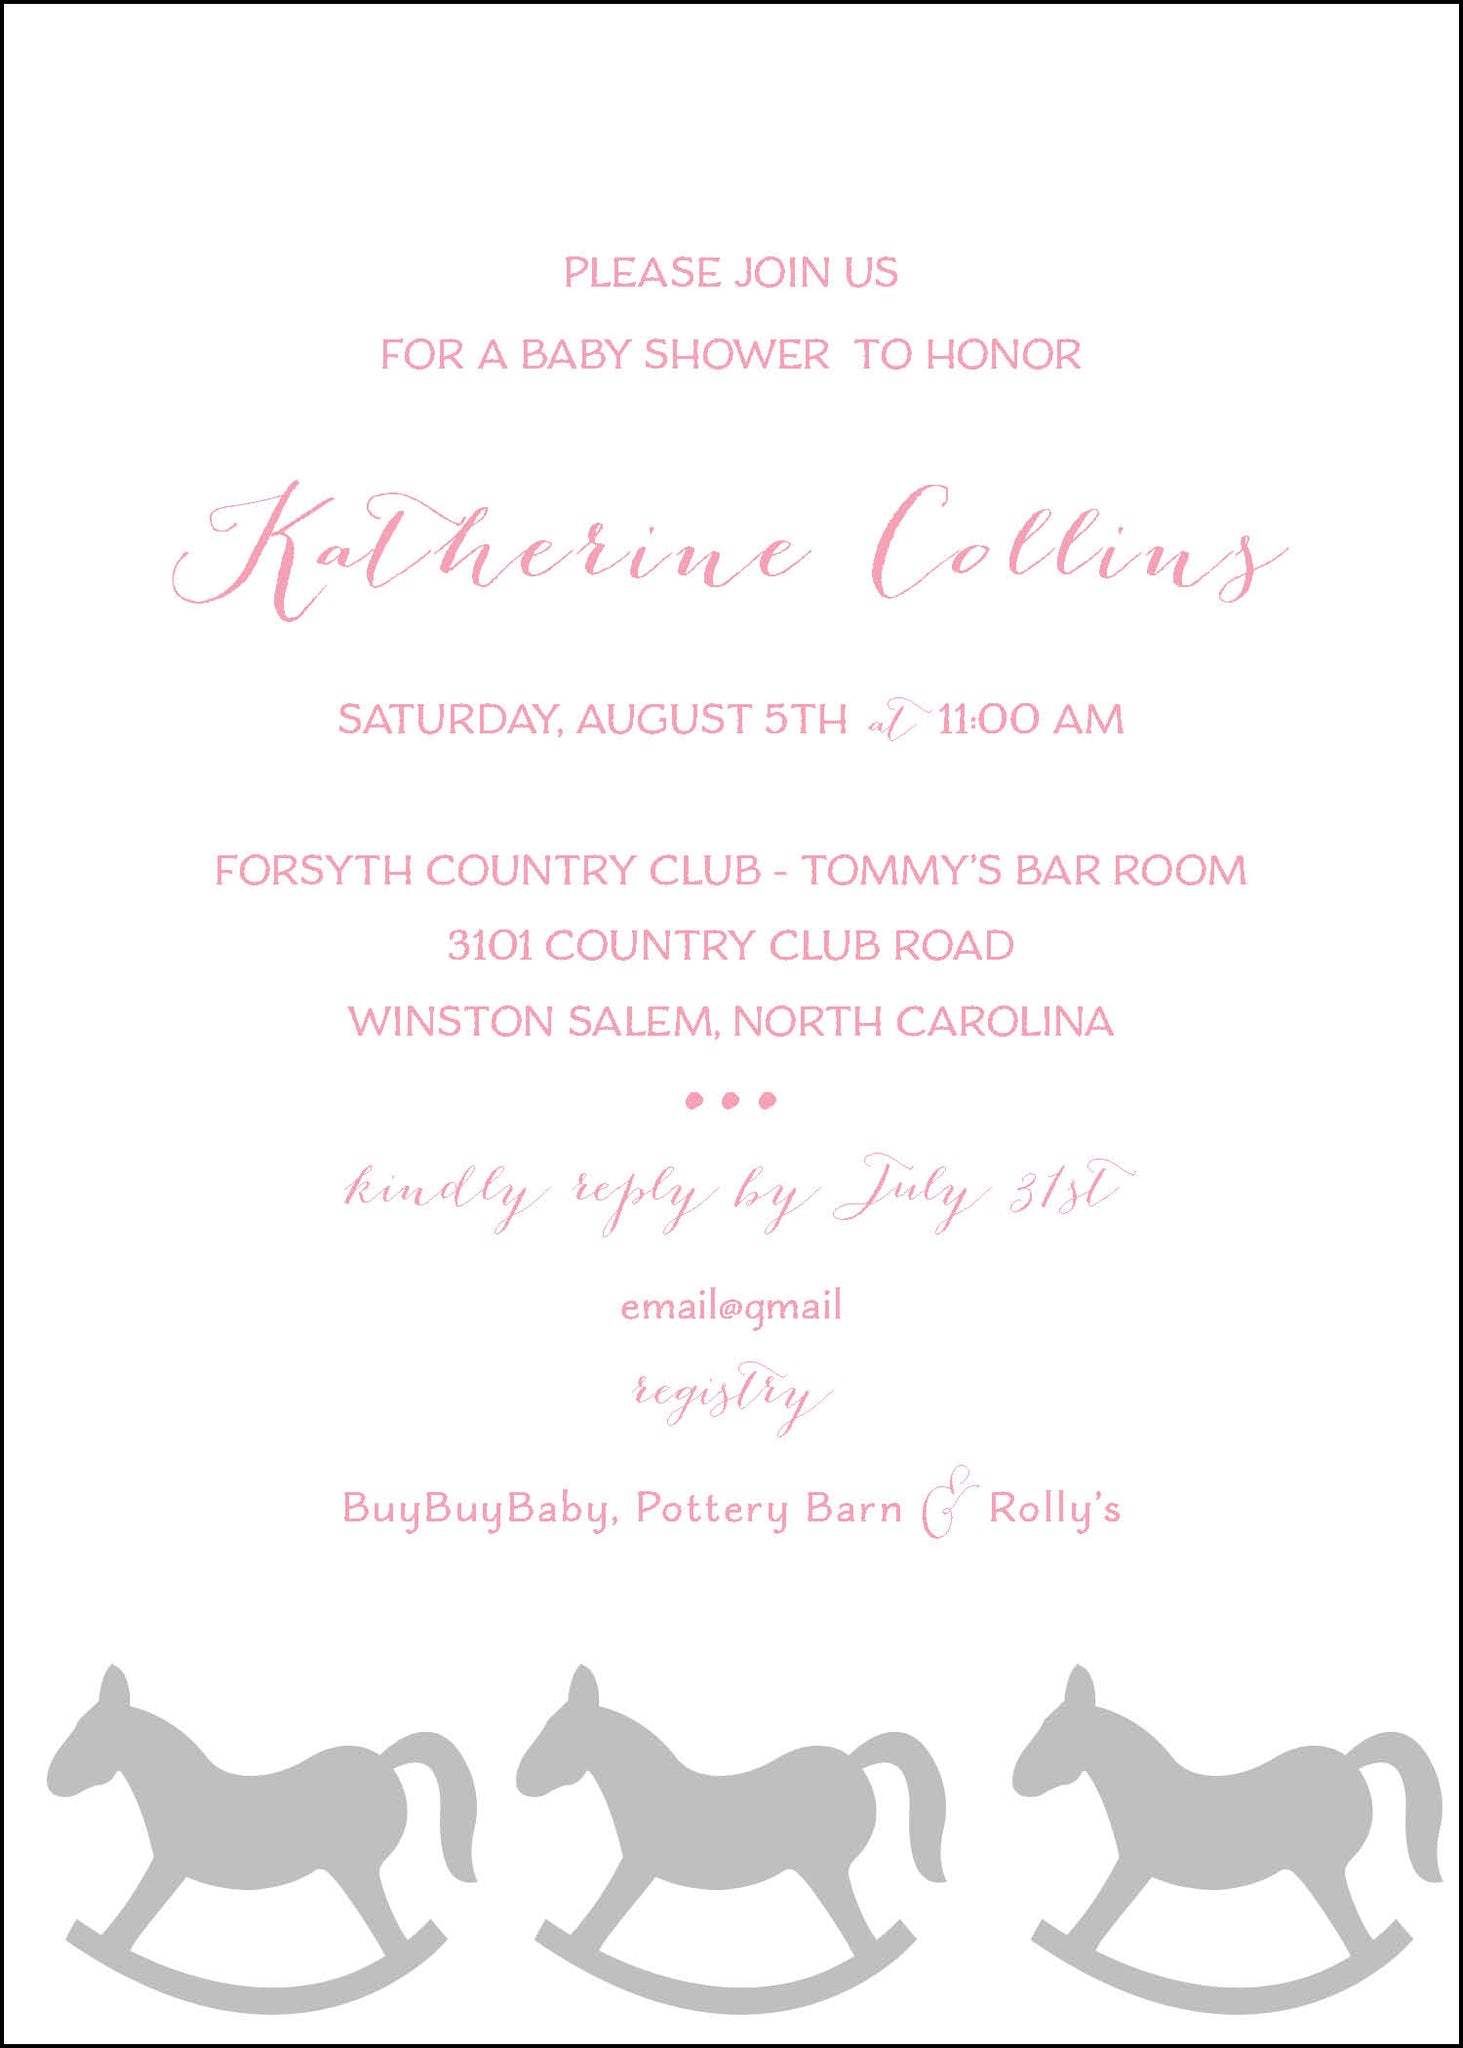 Row of Rocking Horses Baby Shower Invitation